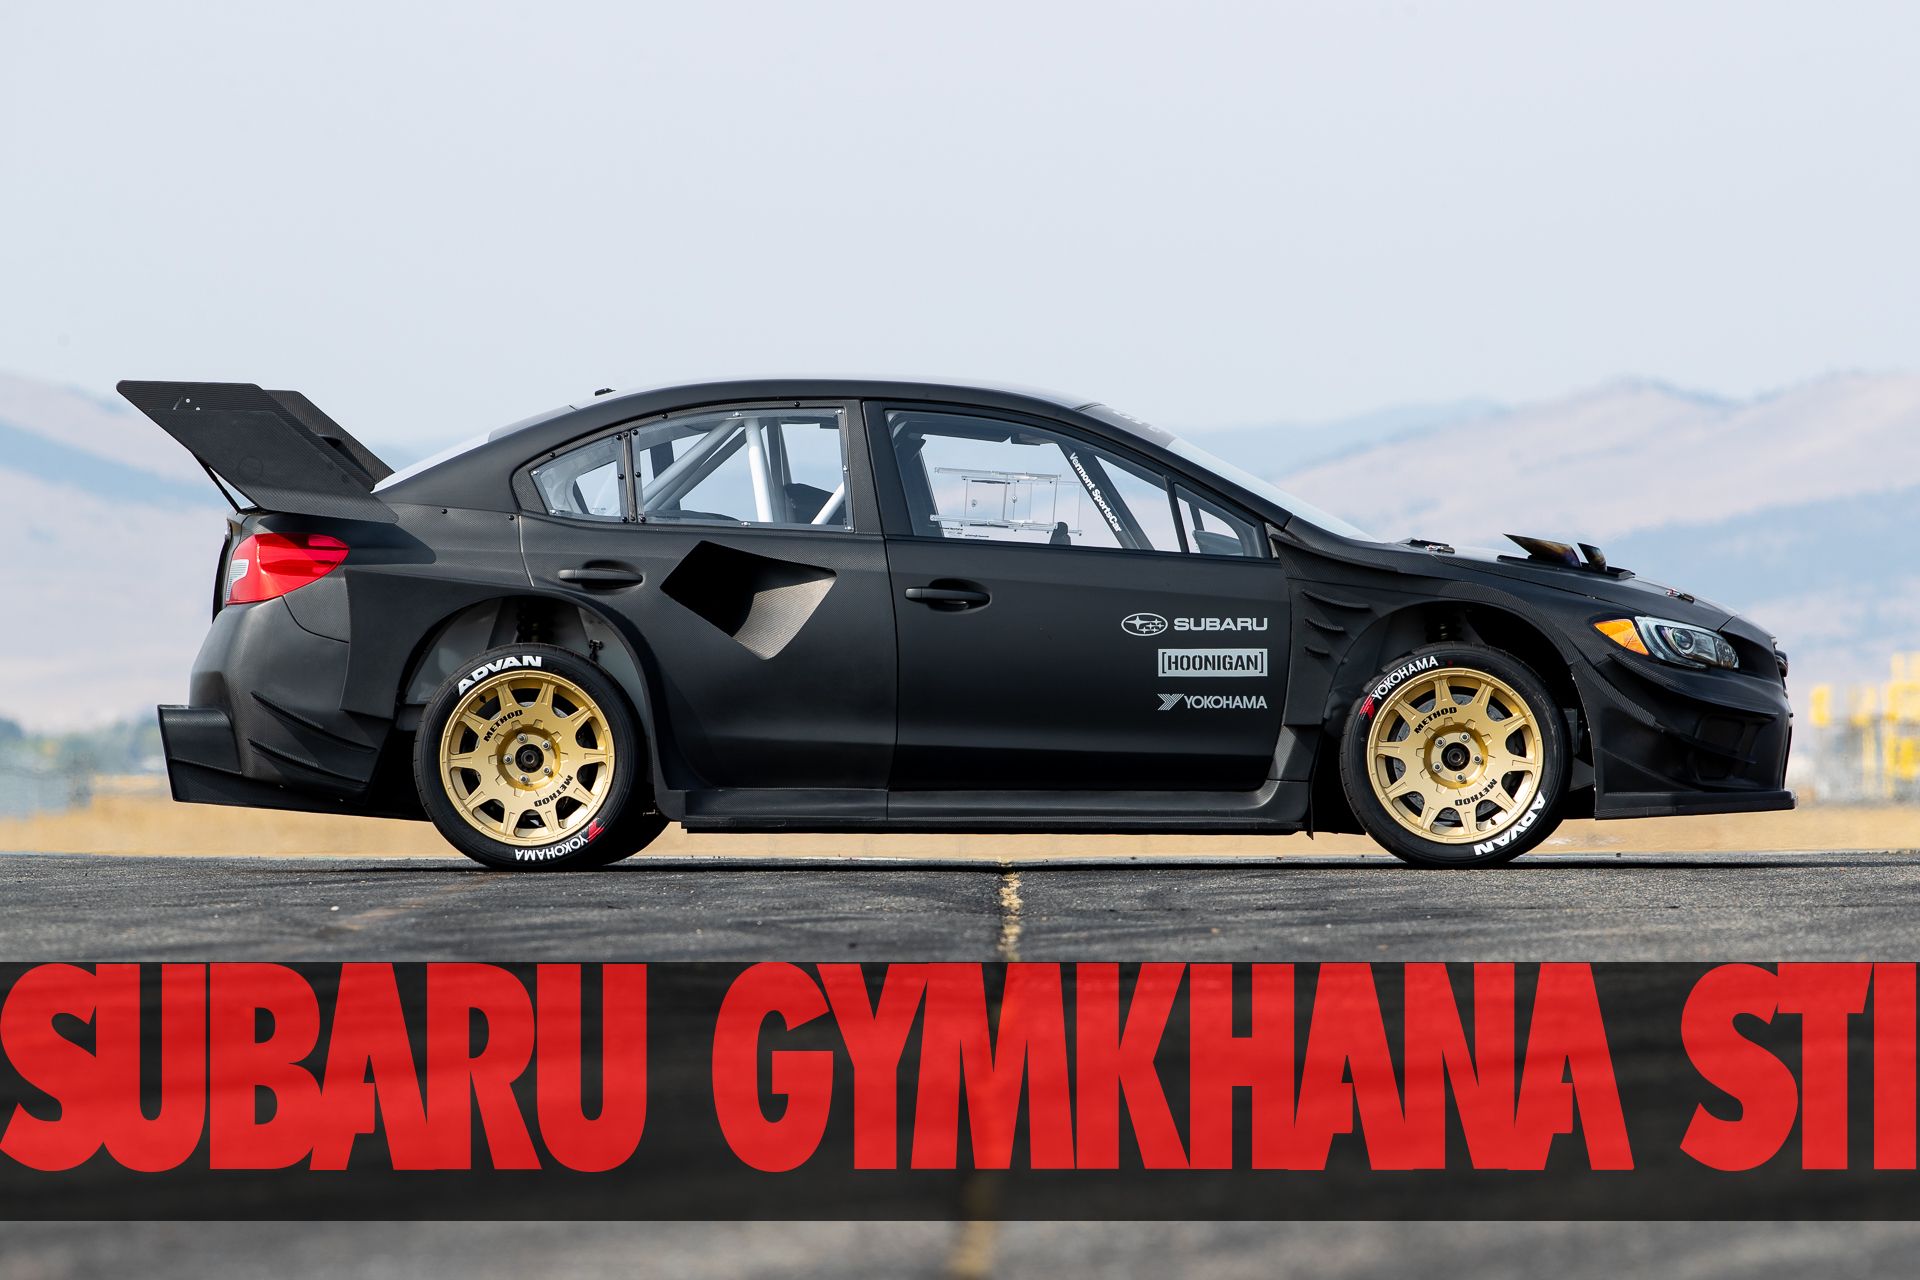 2020 Subaru Gymkhana STI